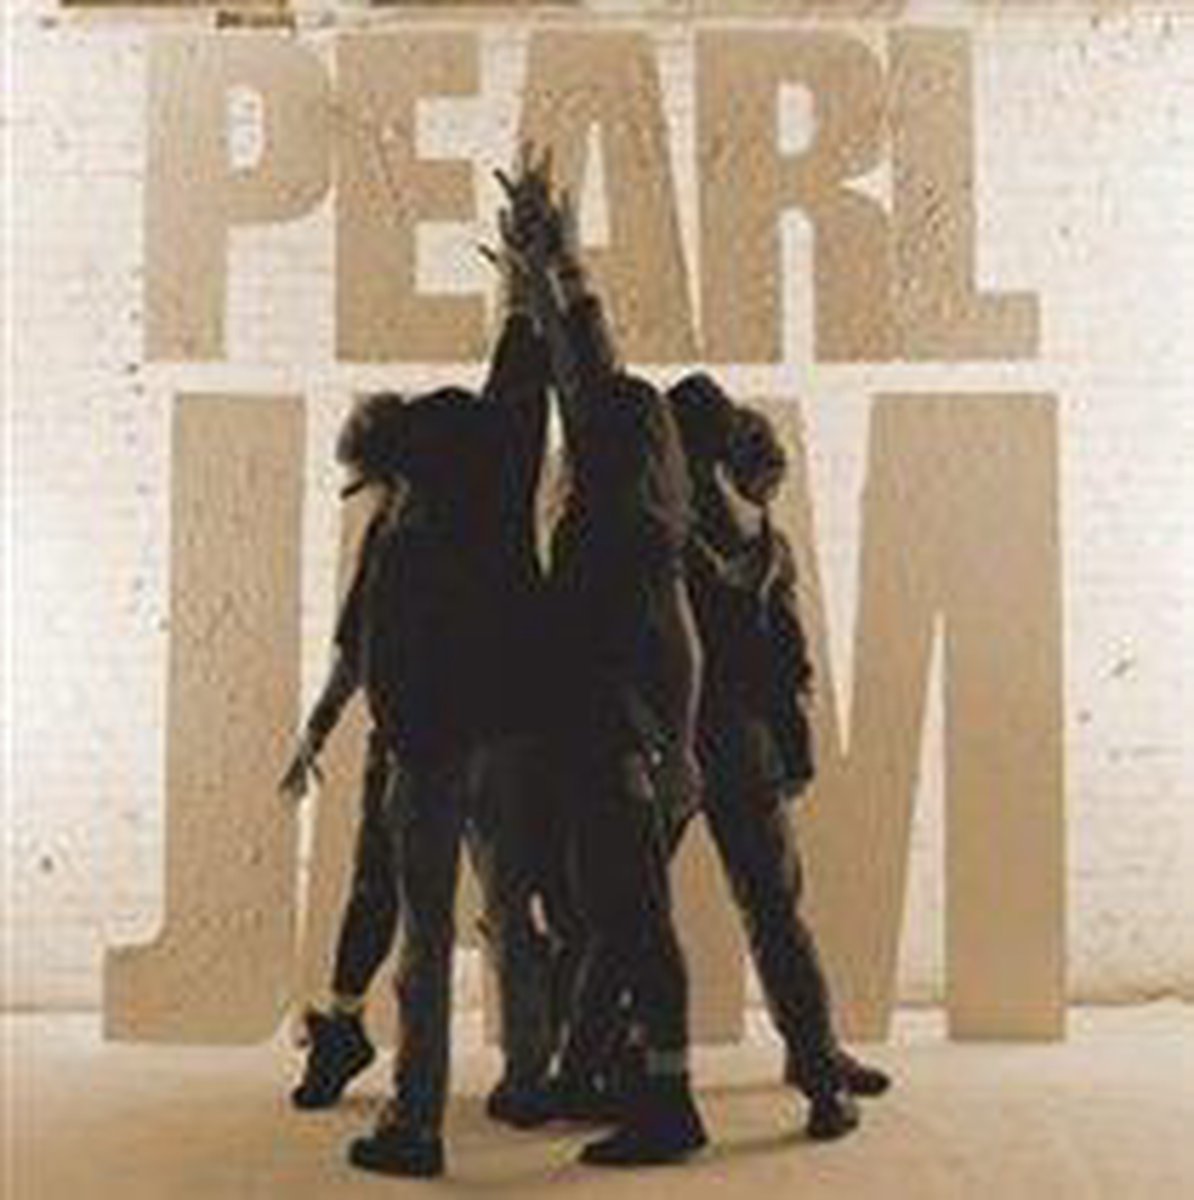 pearl jam ten album cover art